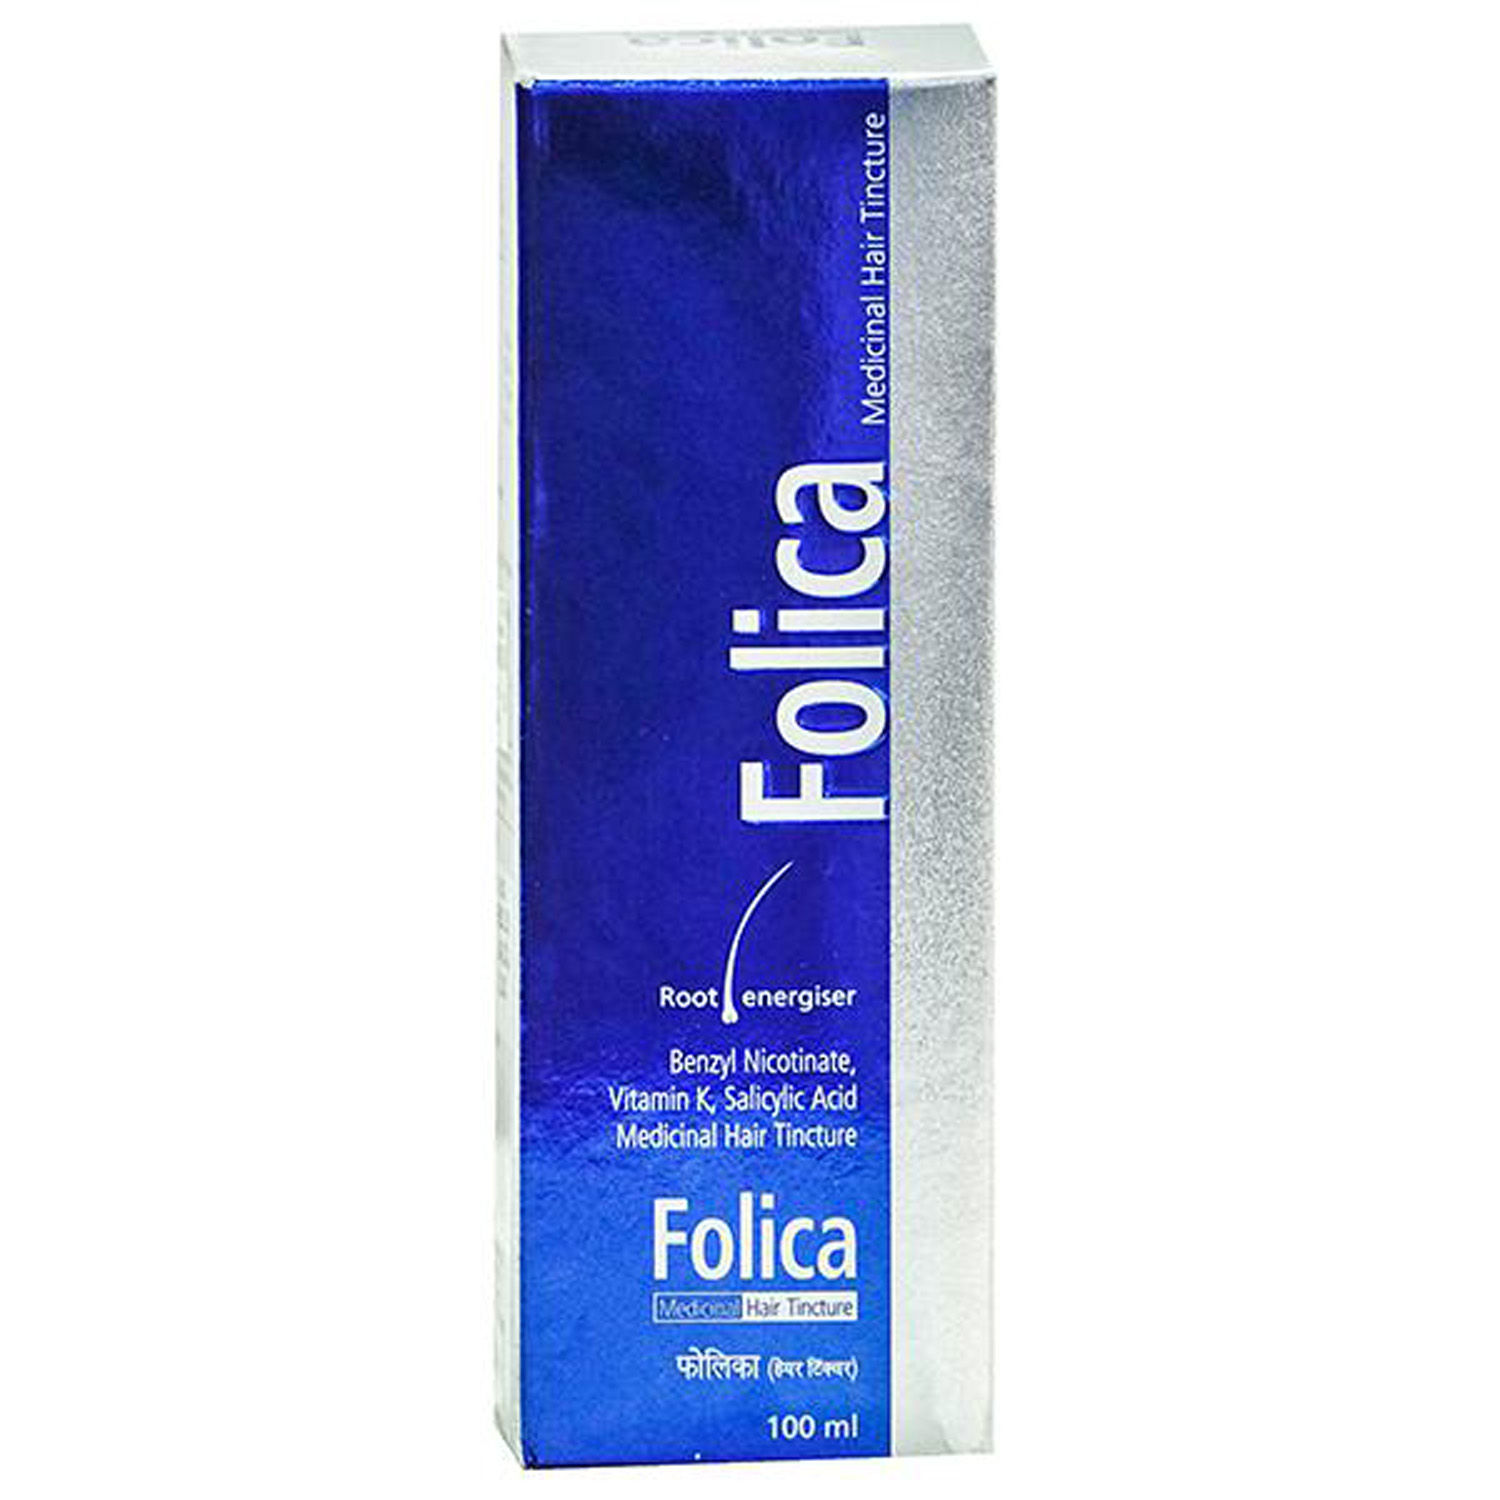 Buy Folica Medicinal Hair Tincture, 100 ml Online